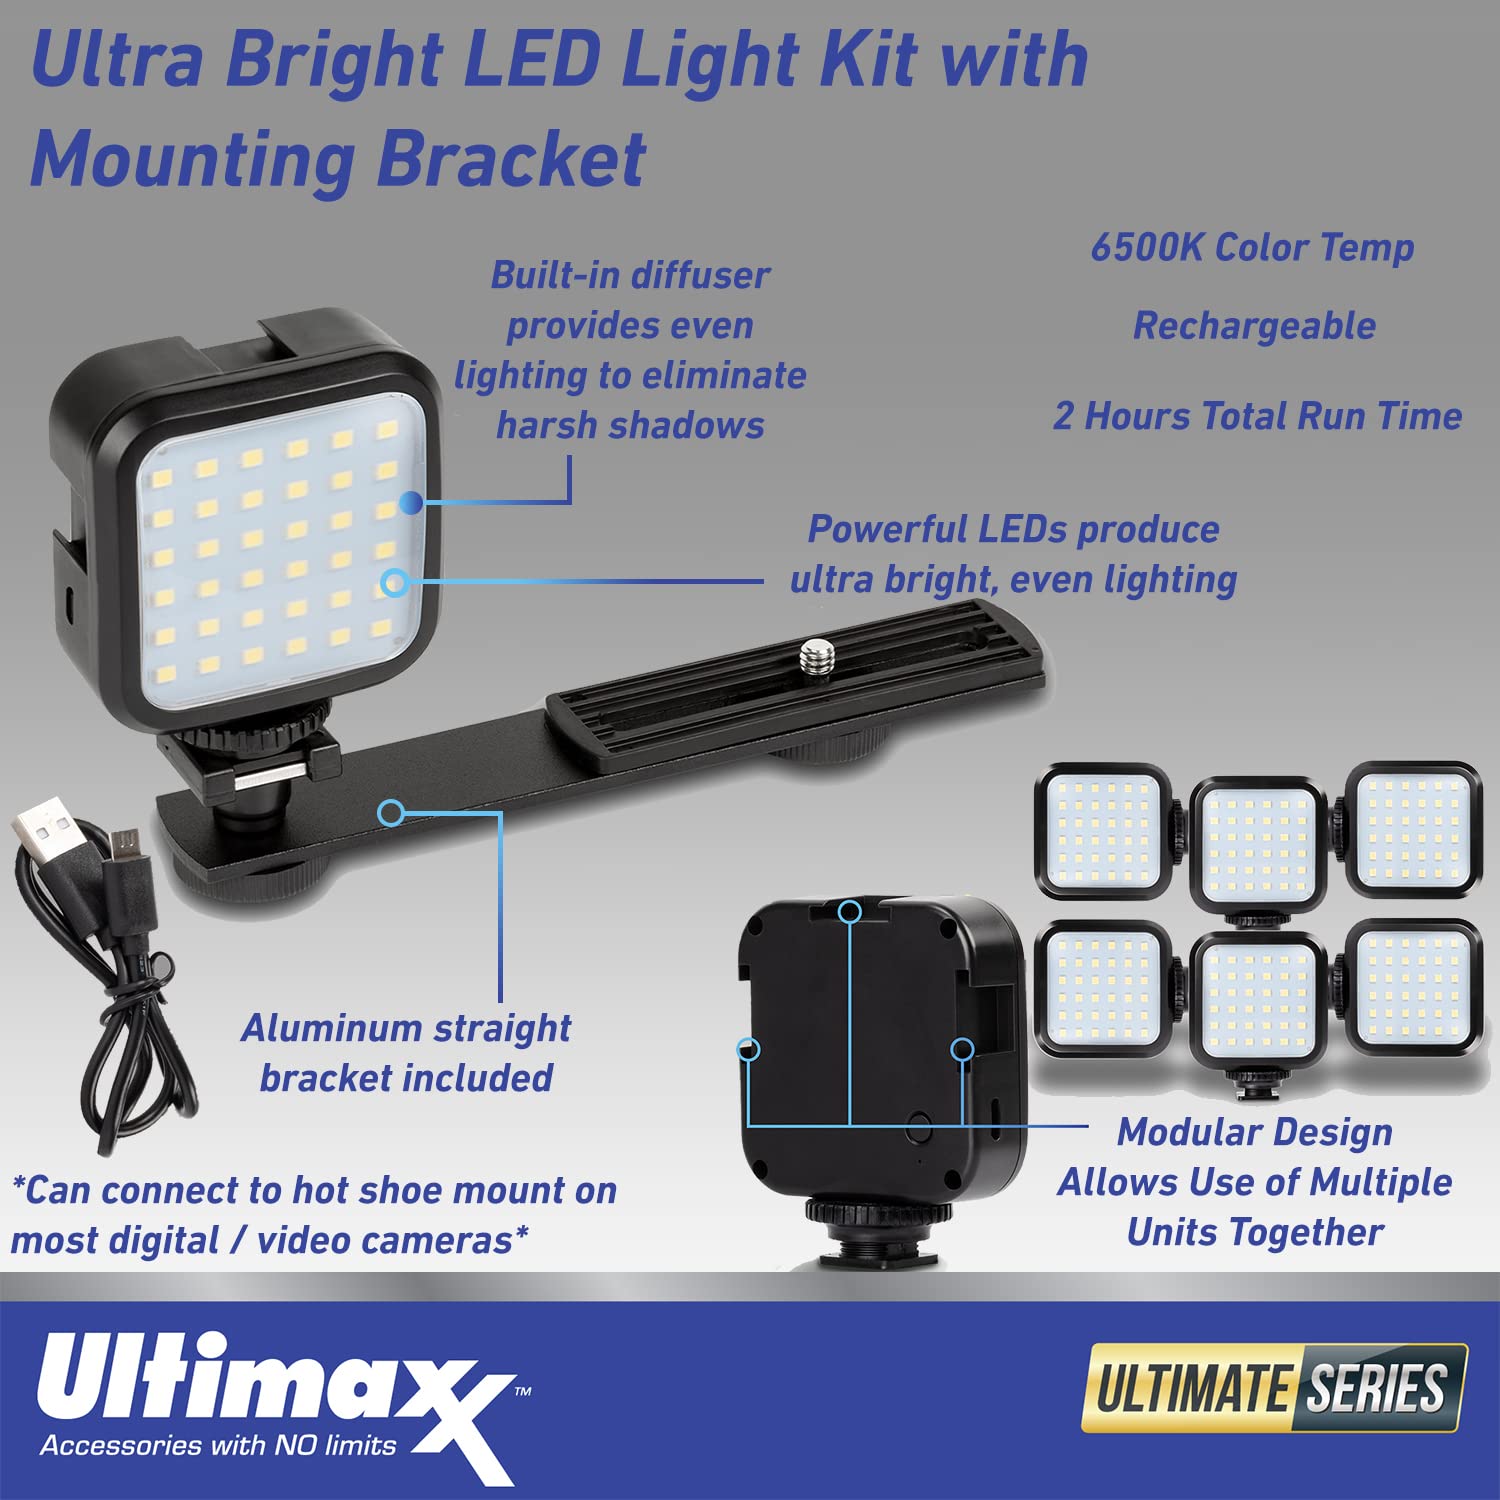 Ultimaxx Advanced FUJIFILM INSTAX MINI EVO Hybrid Instant Camera Bundle (Brown): 64GB Extreme microSD Memory Card, Mini Tripod, Ultra-Bright LED Light Kit, Point-and-Shoot Case &Much More(15pc Bundle)